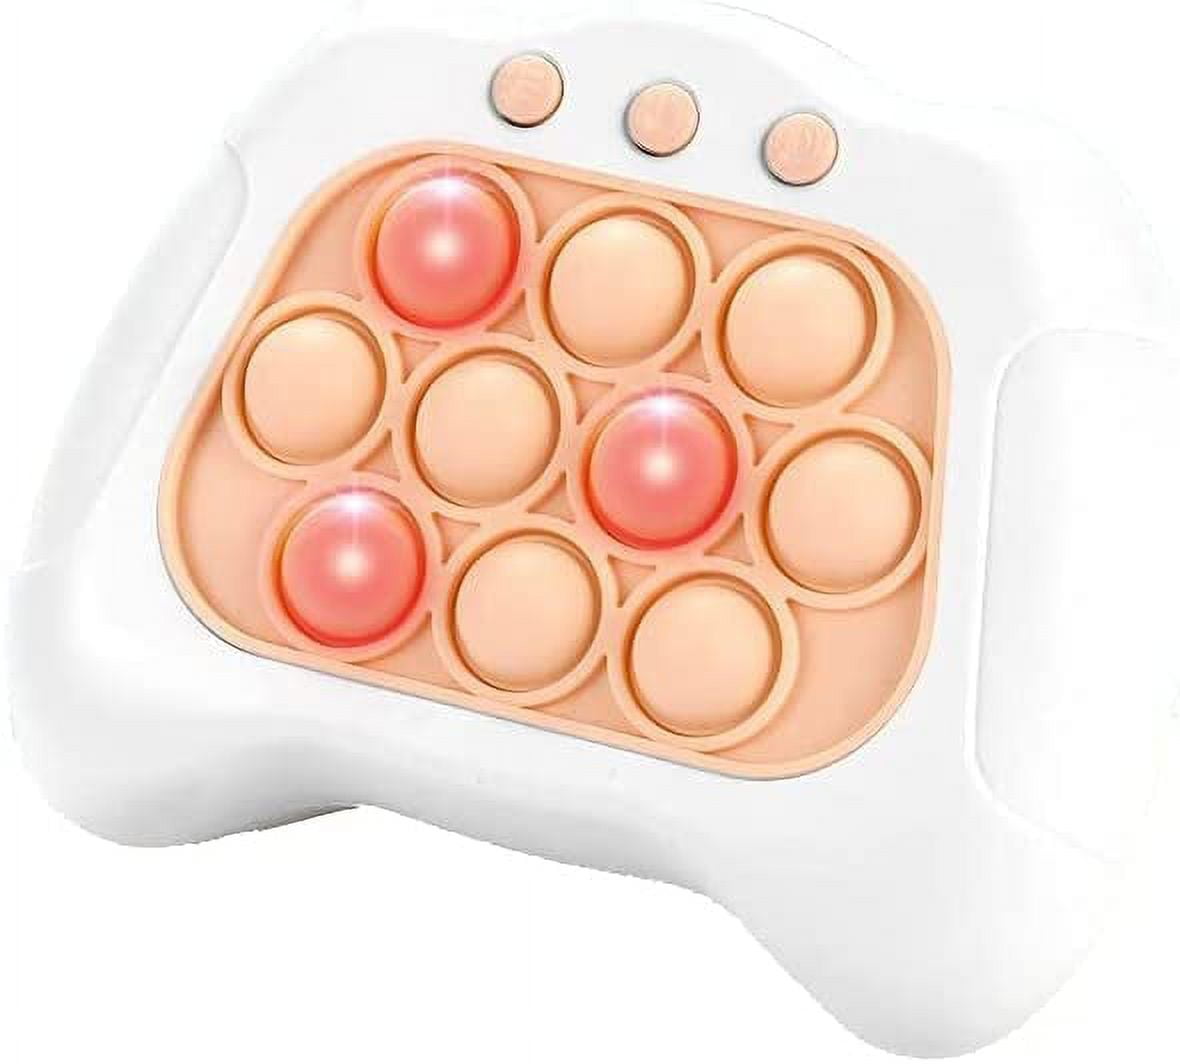 2PCS Quick Push Bubbles Game Console Whack-a-mole Sensory Toys Finger  Sensory Antistress for Kids Training Focused on Montessori Toys